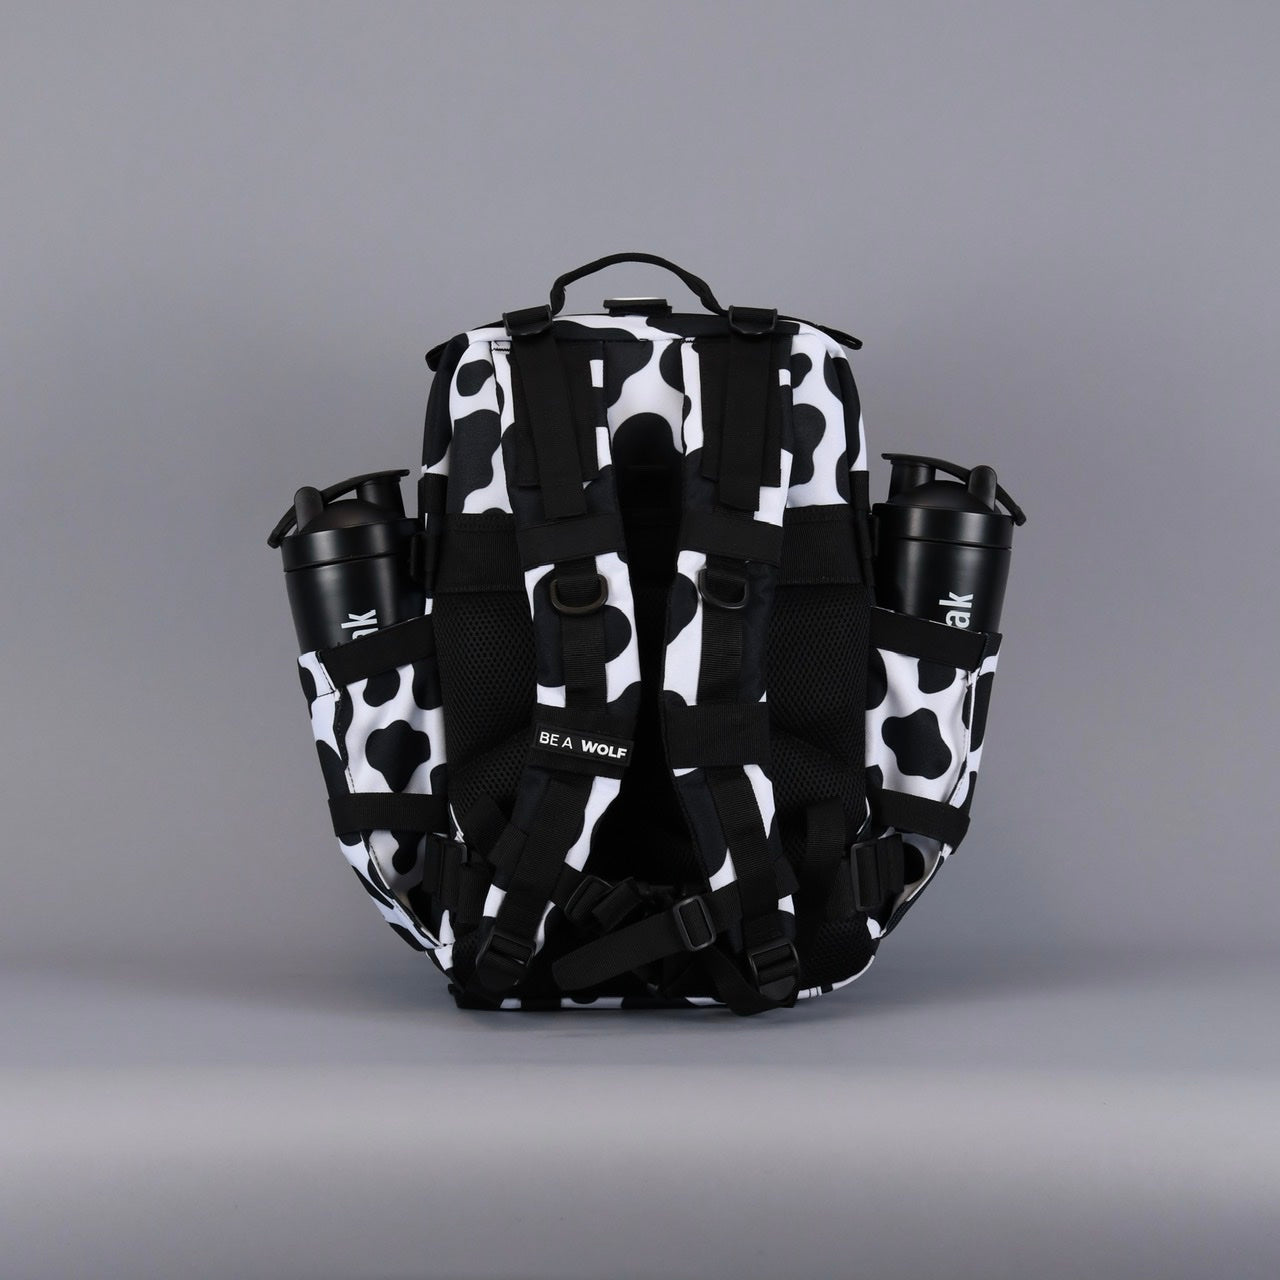 35L Backpack Black White Cow